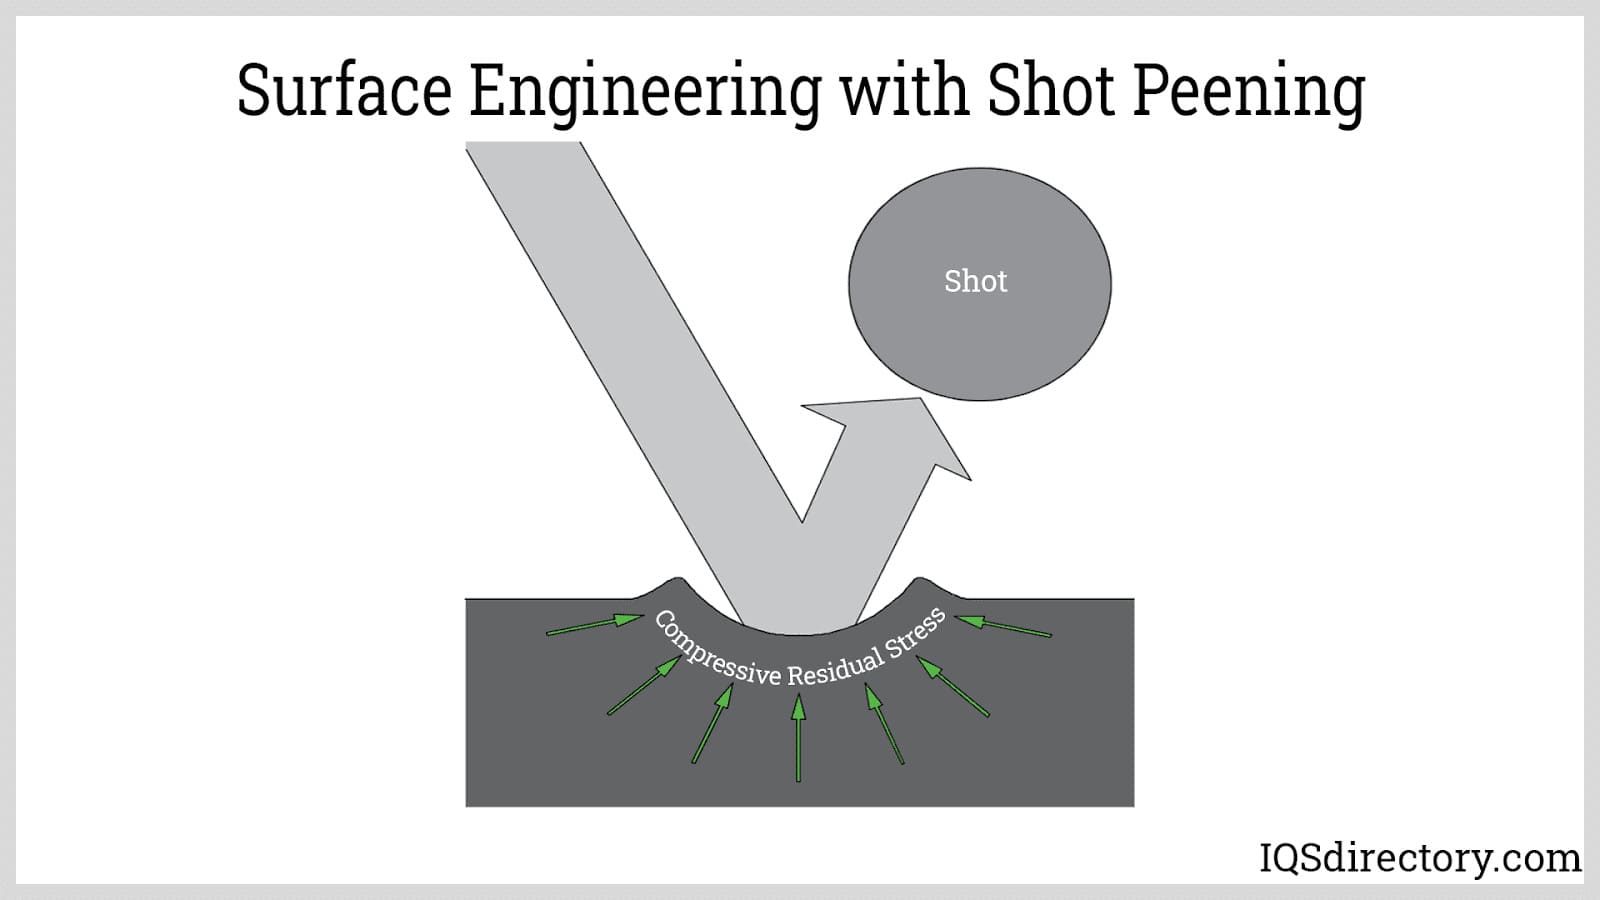 Surface Engineering with Shot Peening